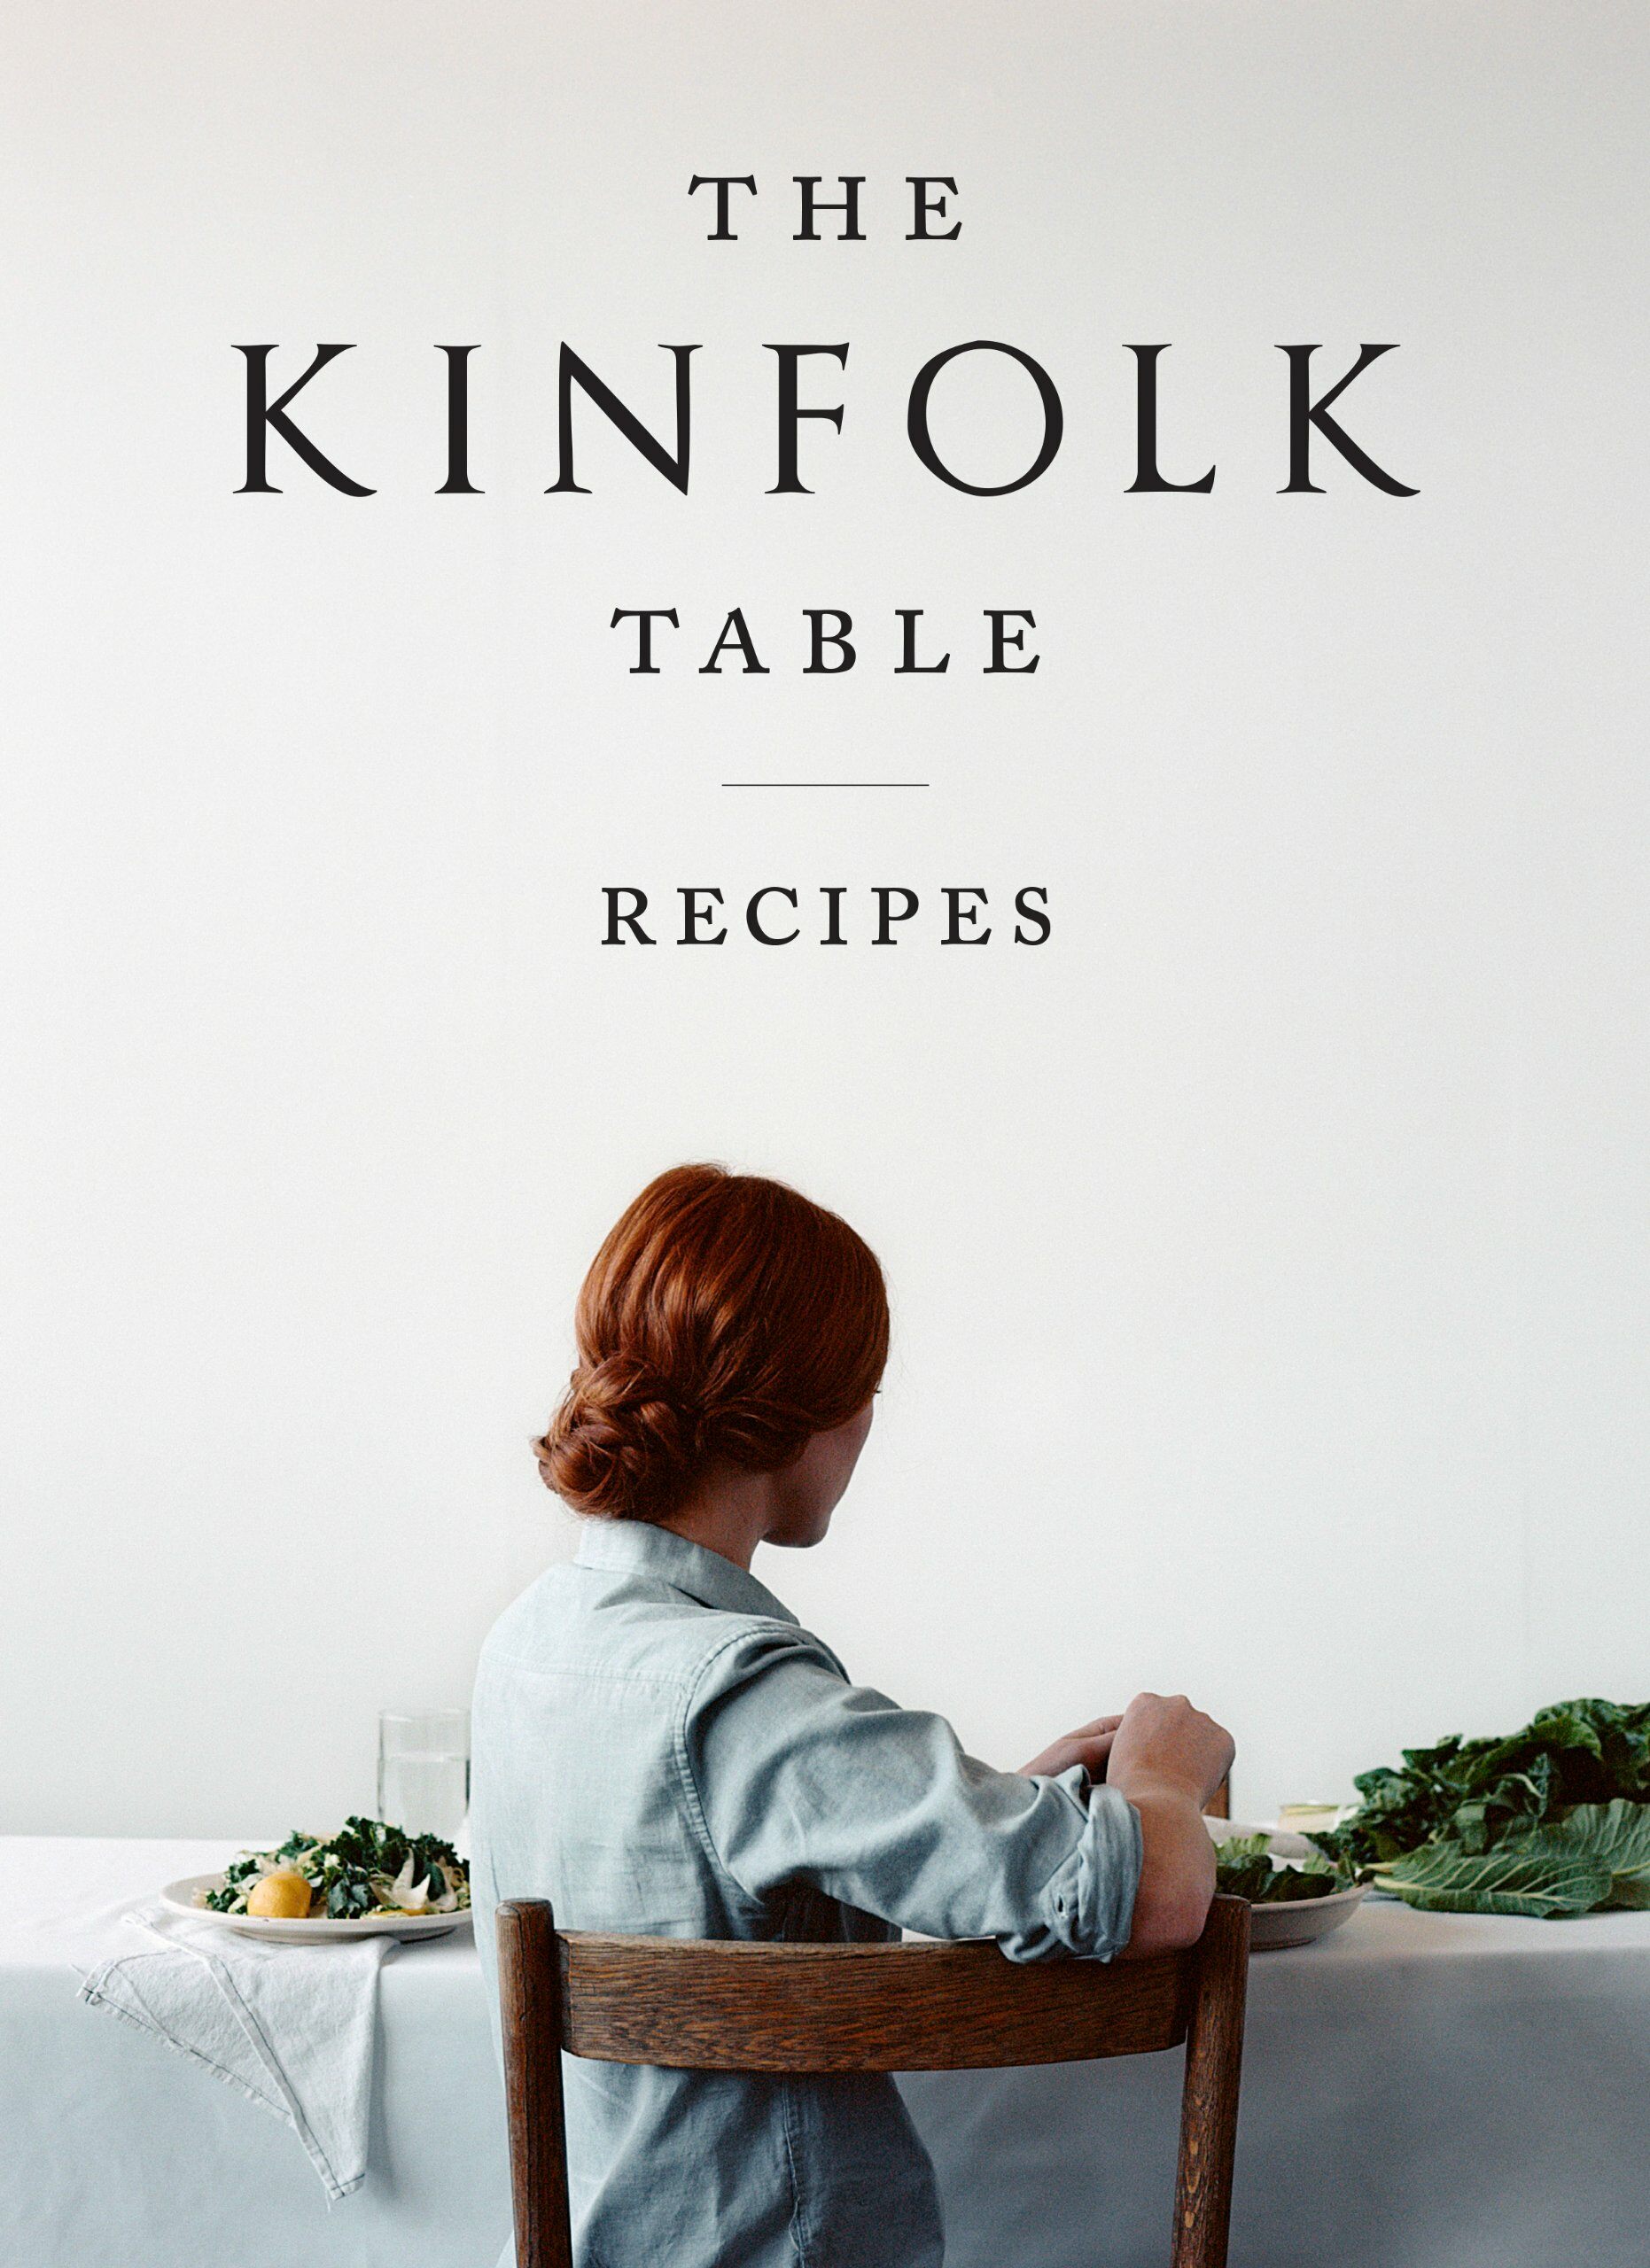 The Kinfolk Table (Hardcover)